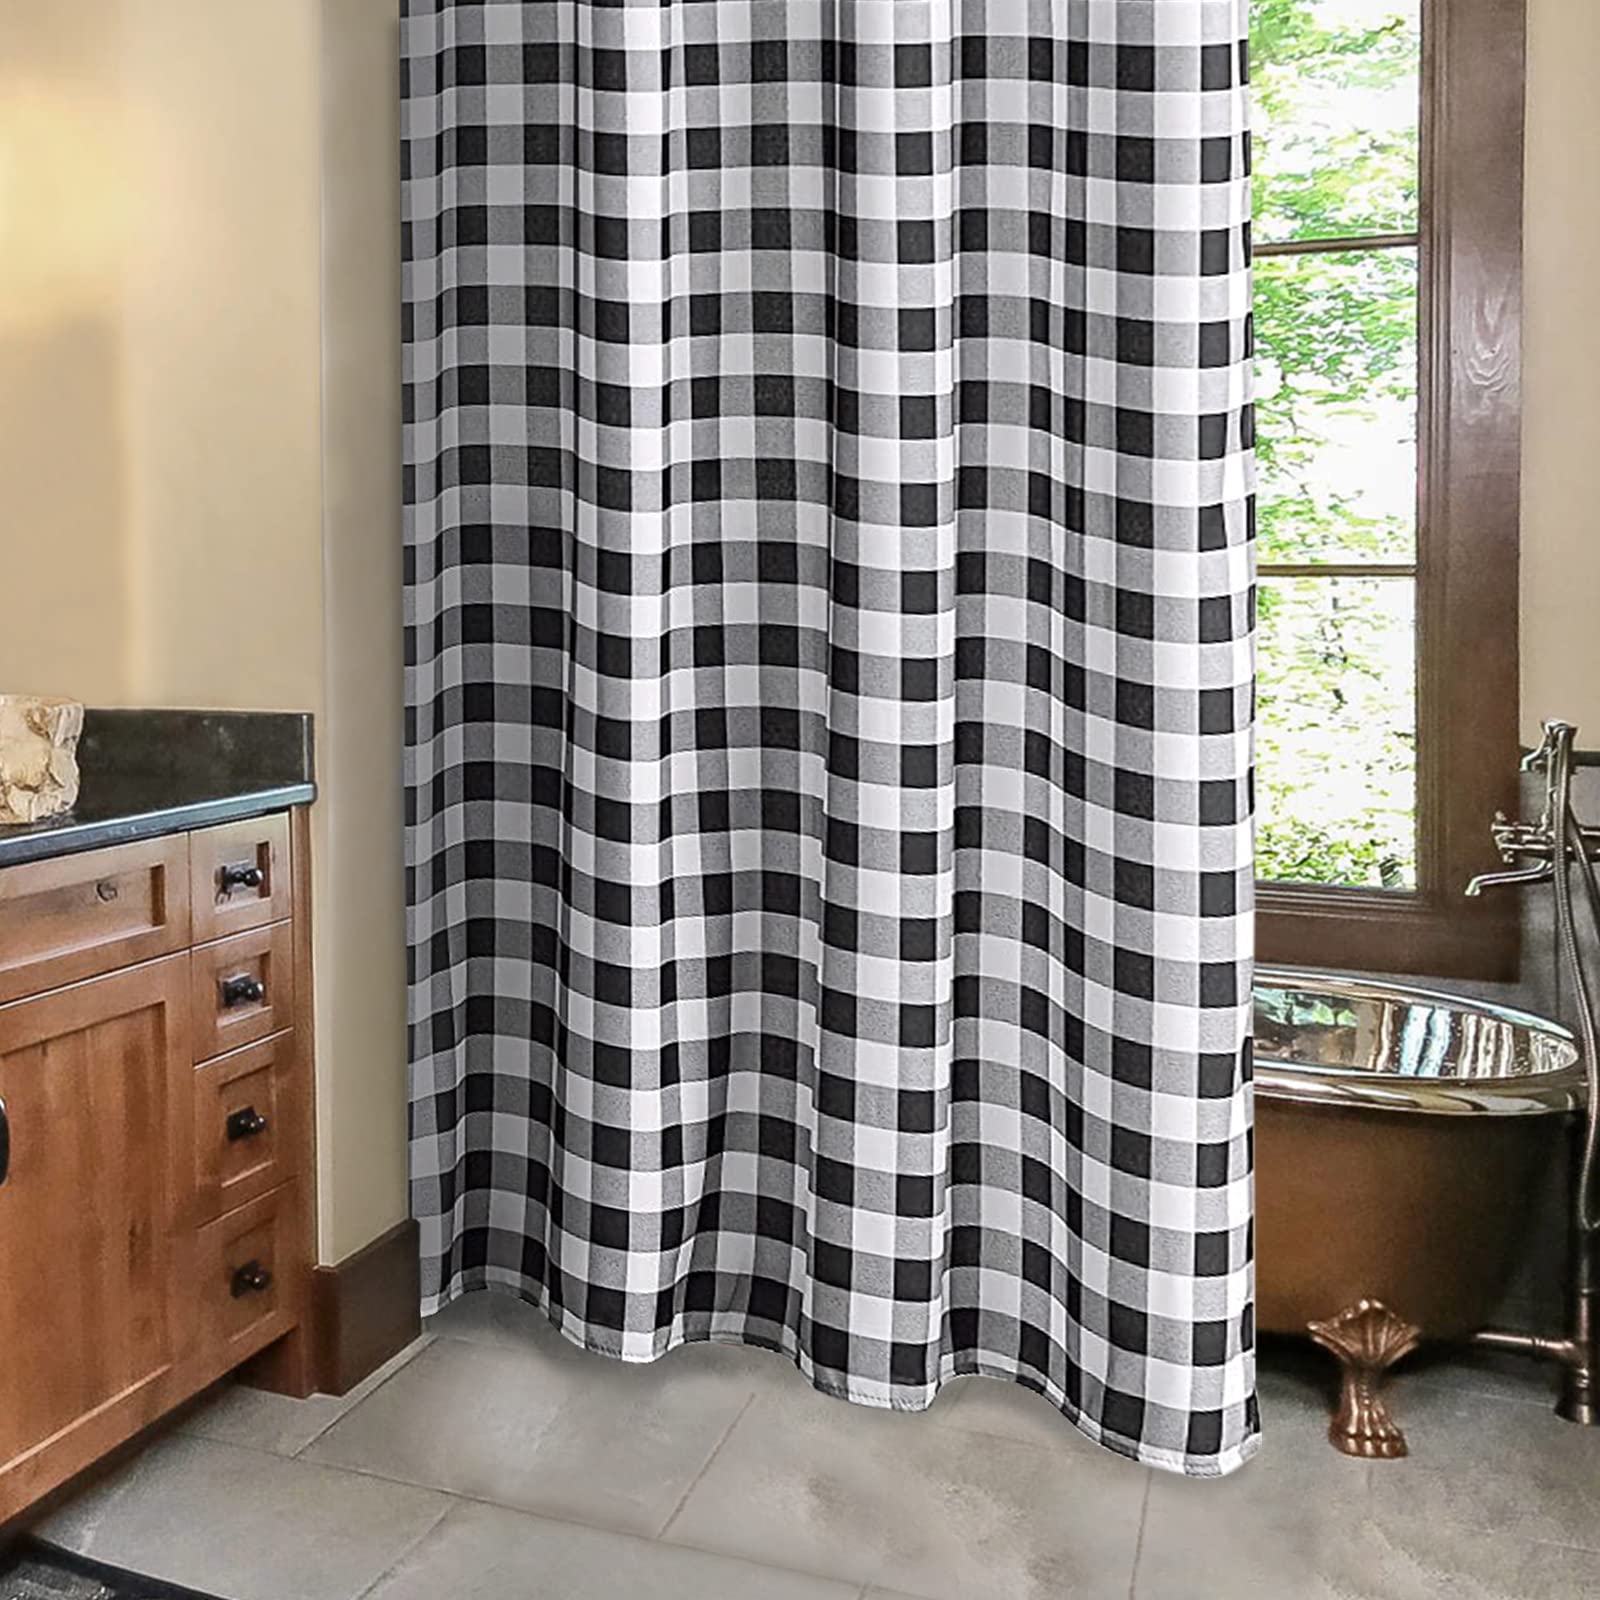 SEEYE Buffalo Plaid Shower Curtain Black and White Farmhouse Shower Curtain Polyester Waterproof Fabric Bathroom Shower Curtain with 12 Hooks, 72"×72"